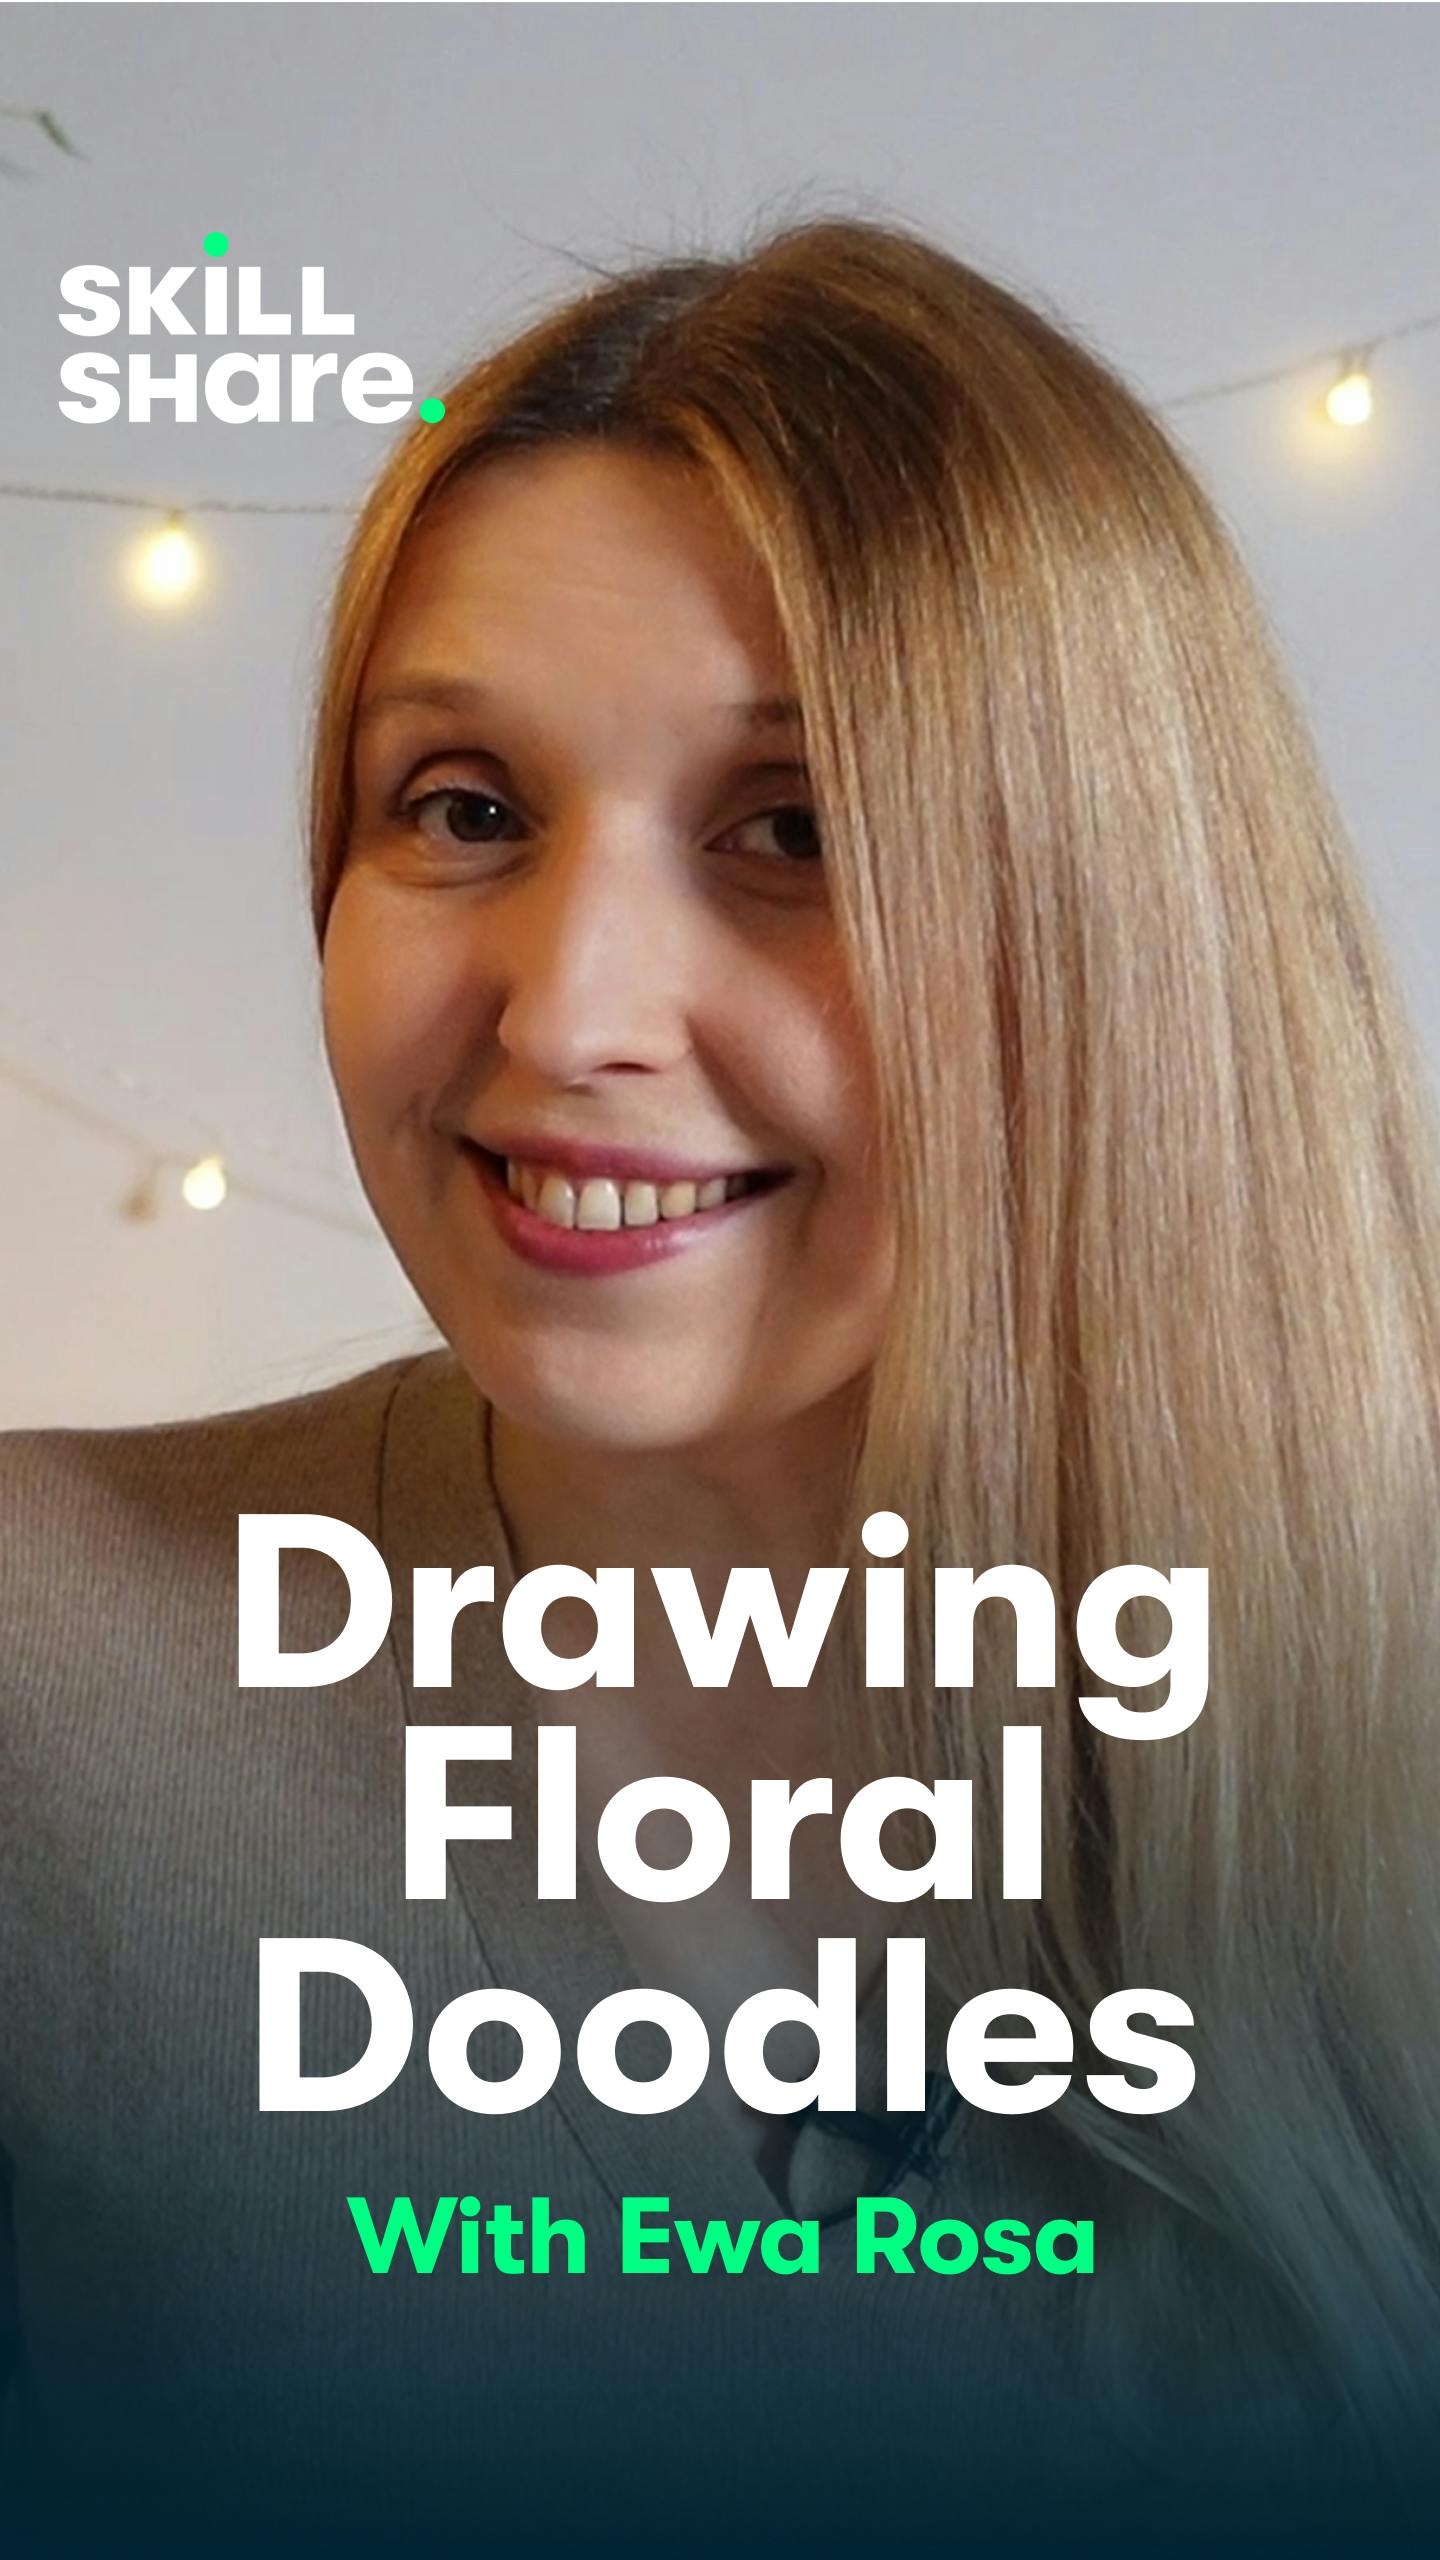 Skillshare: Drawing Floral Doodles